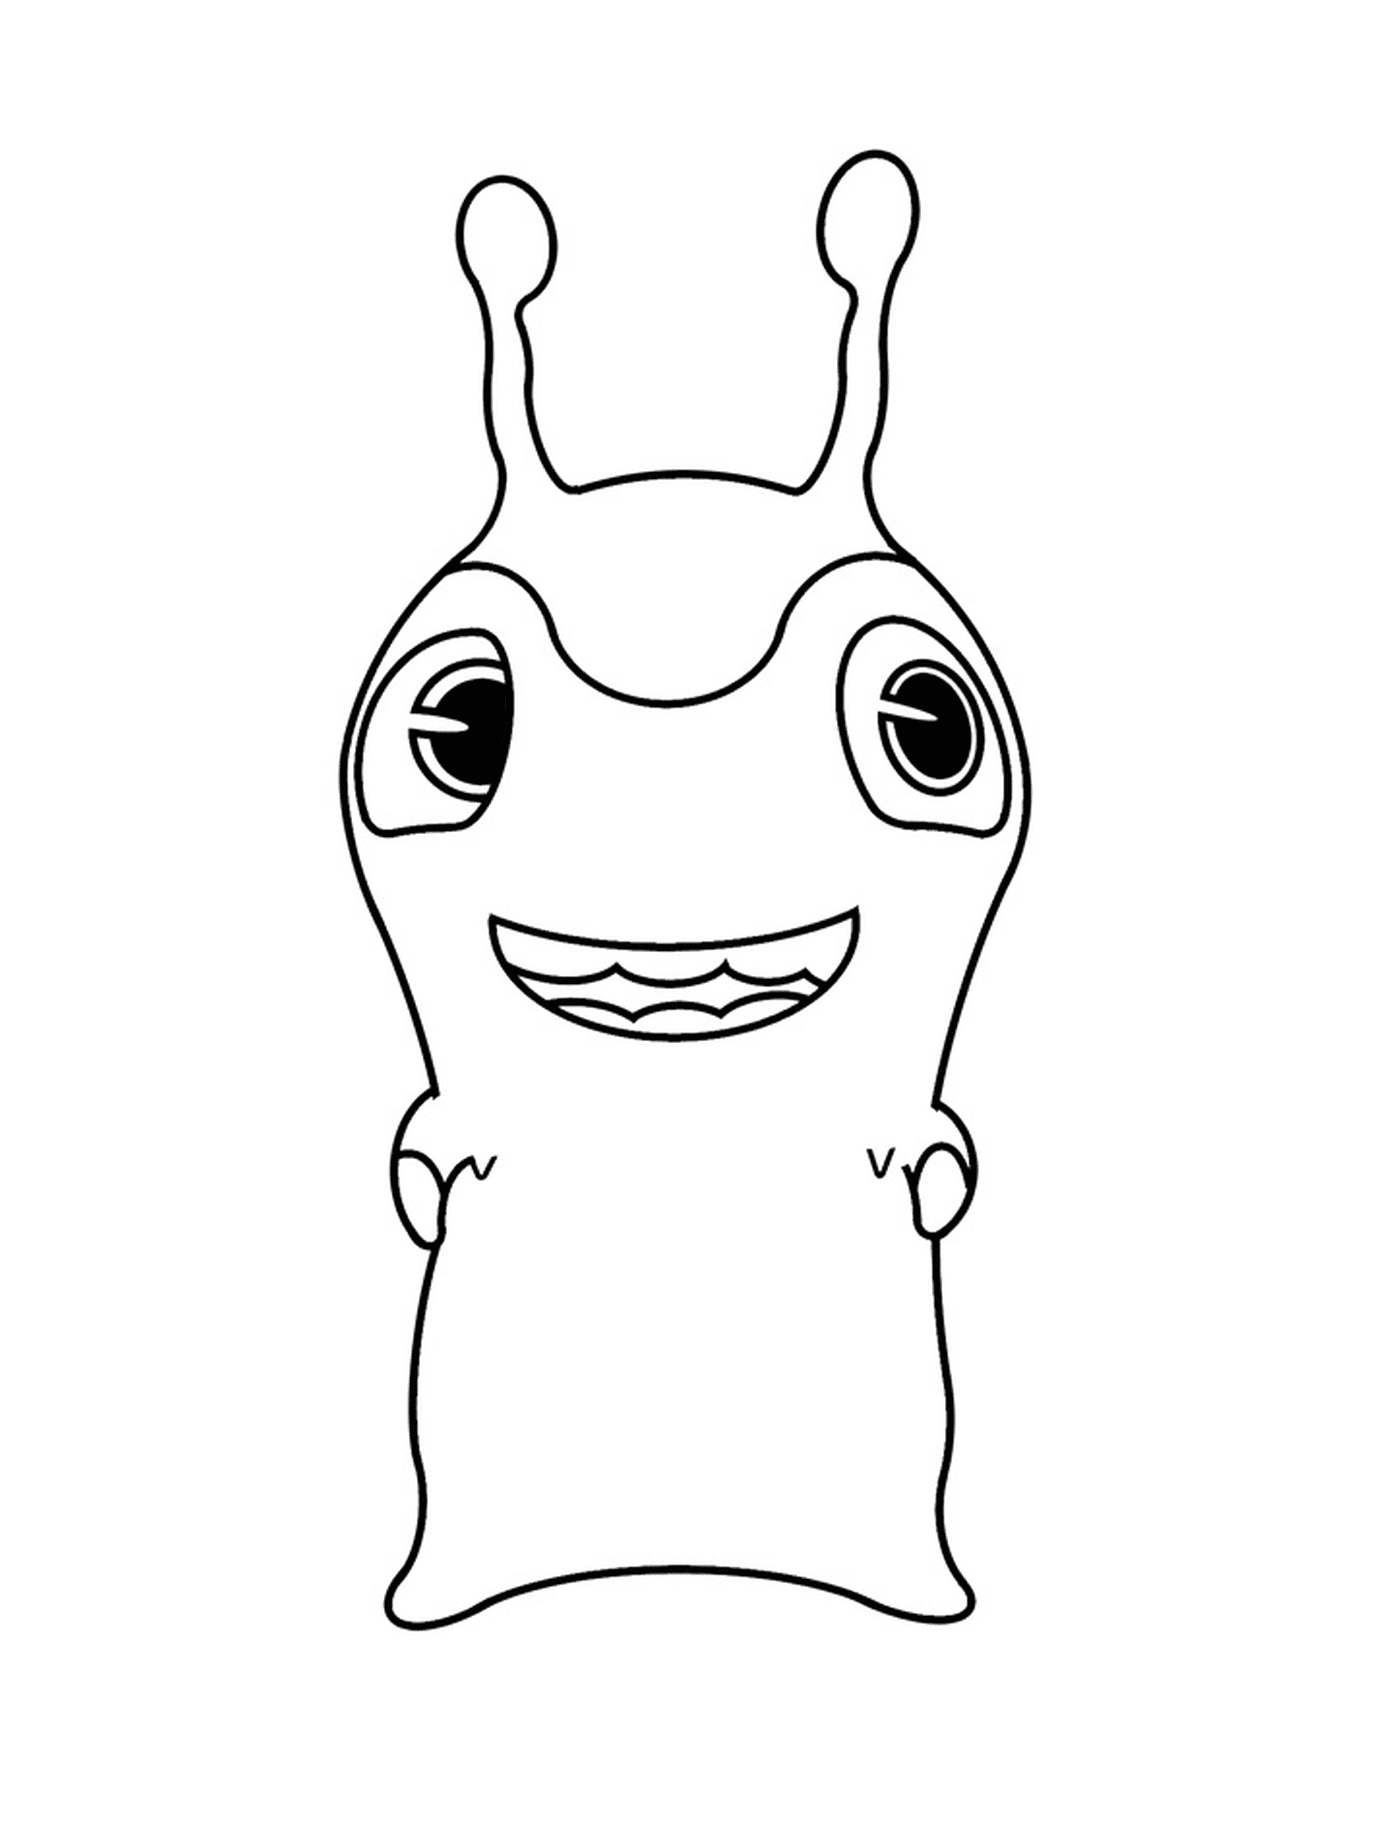  Jellyish, smiling animal 